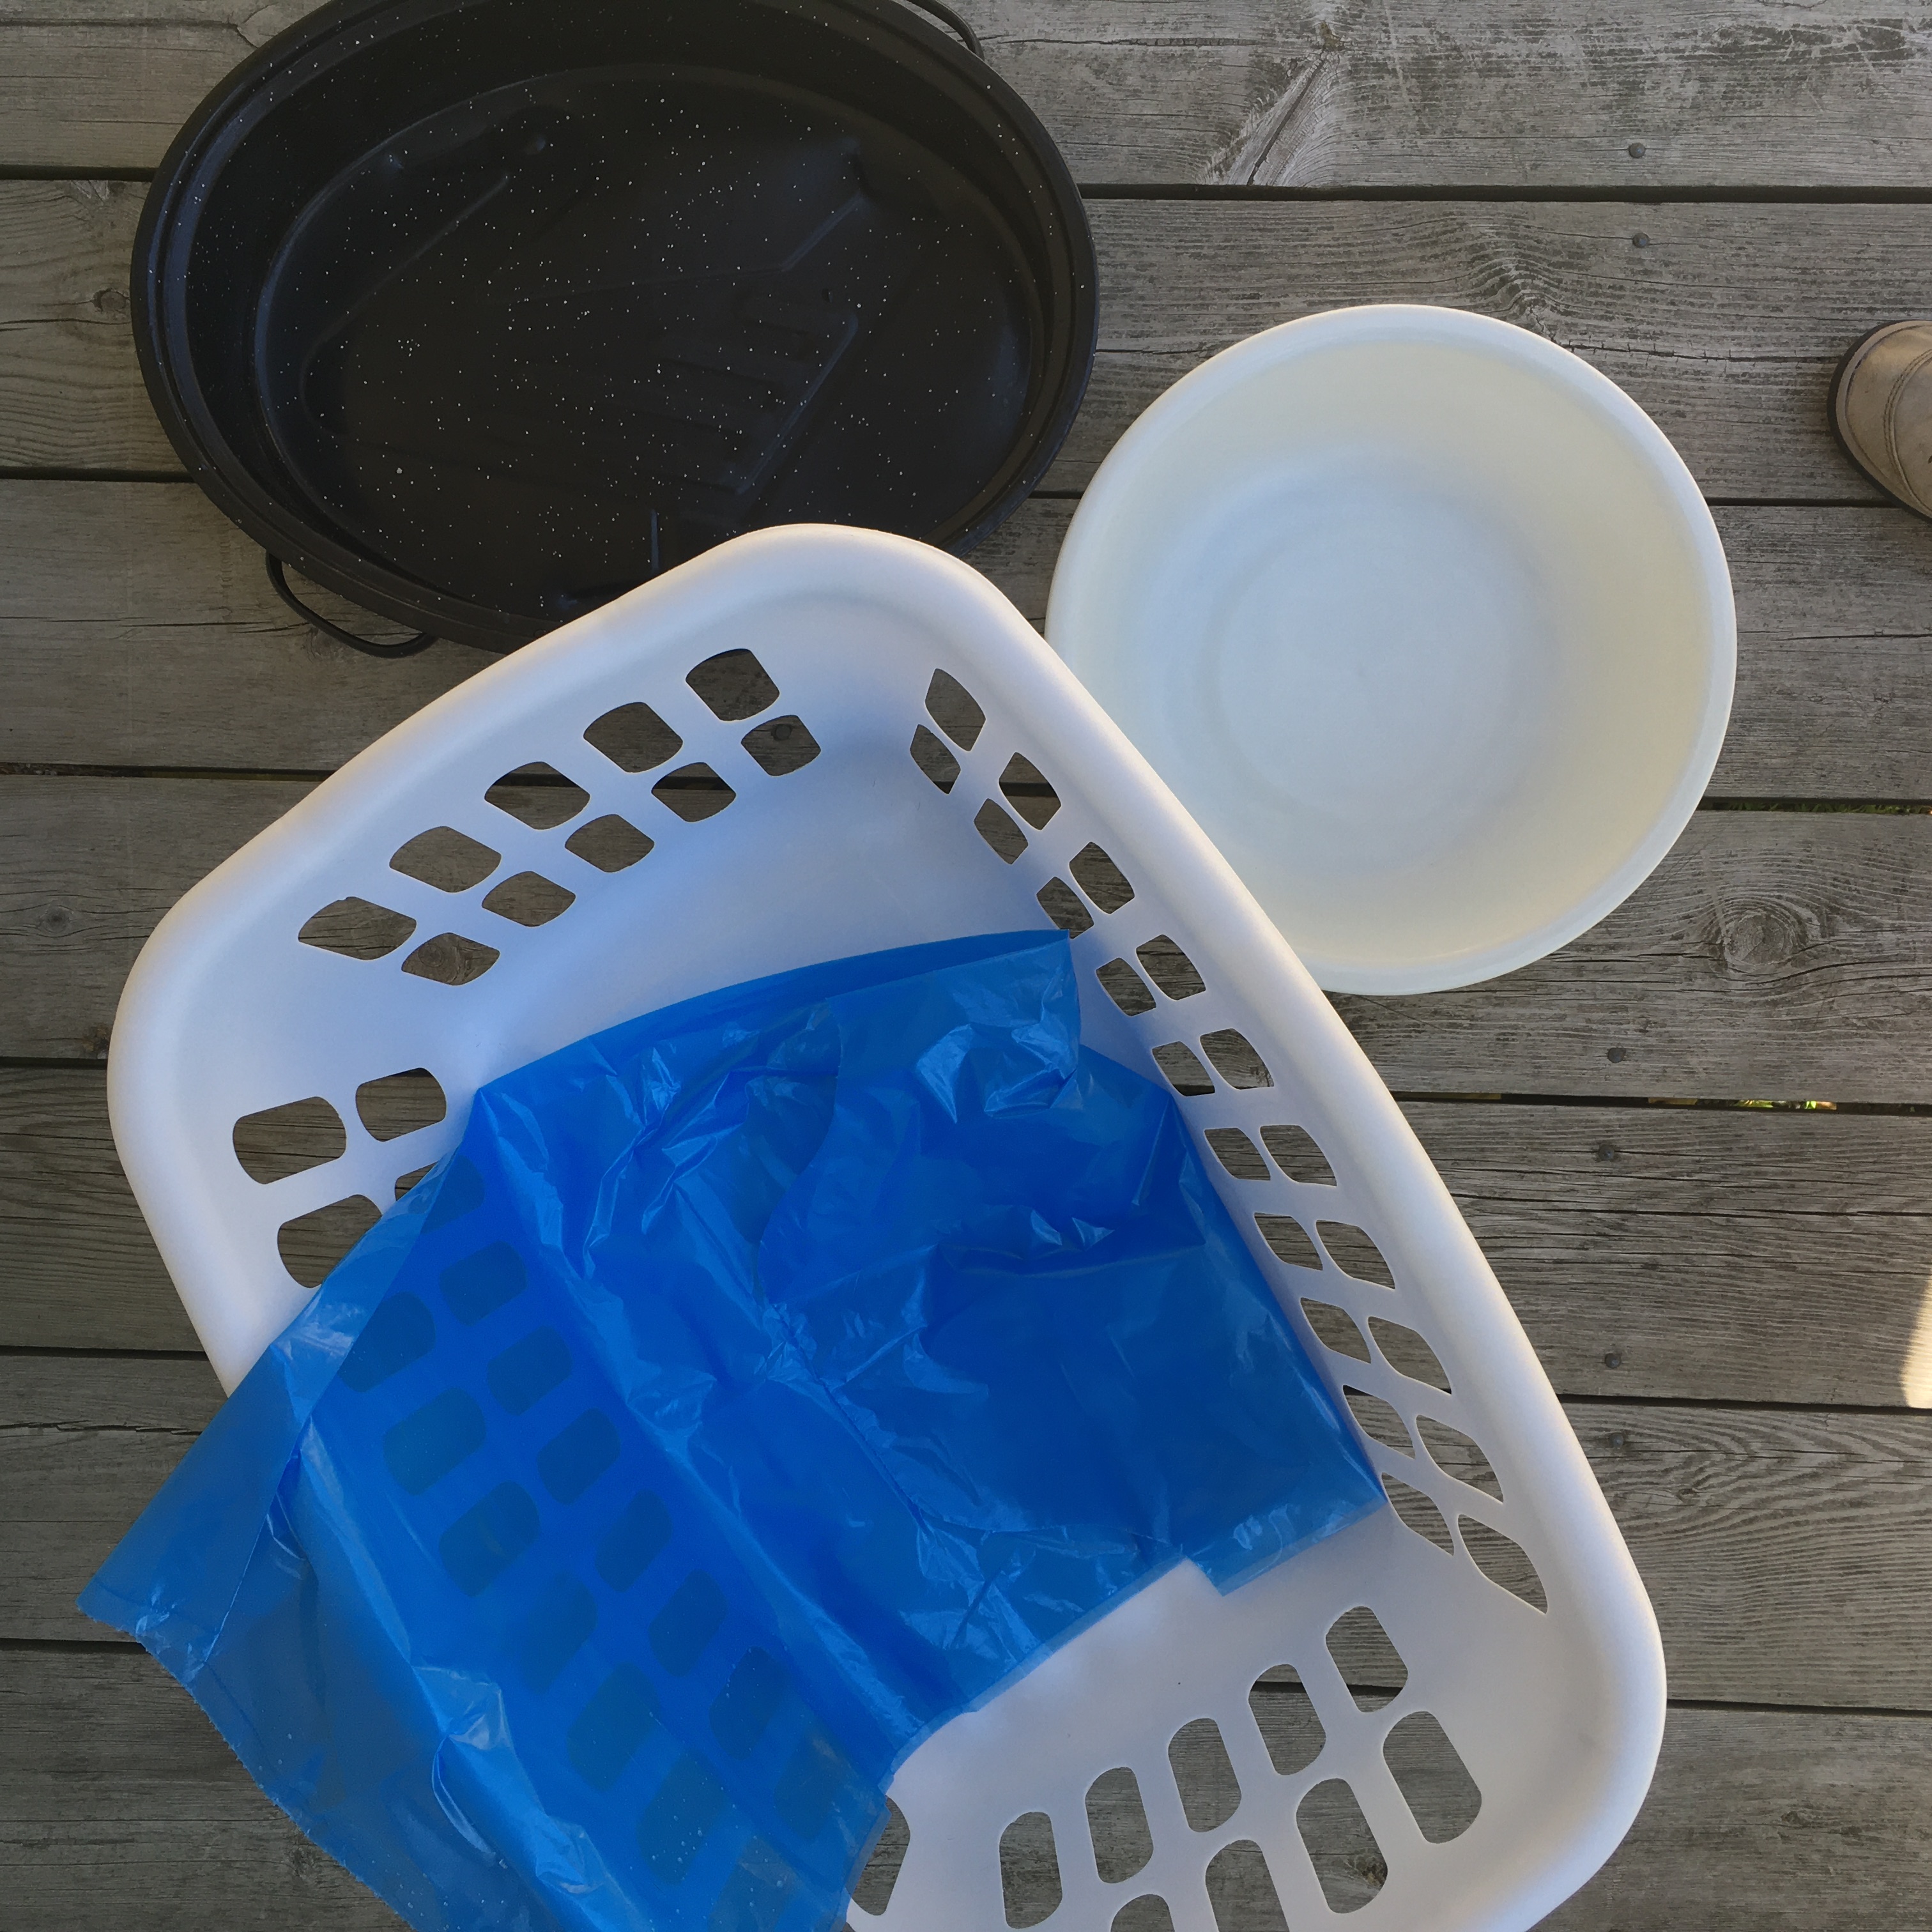 laundry basket, roasting pan, bucket, and blue bag